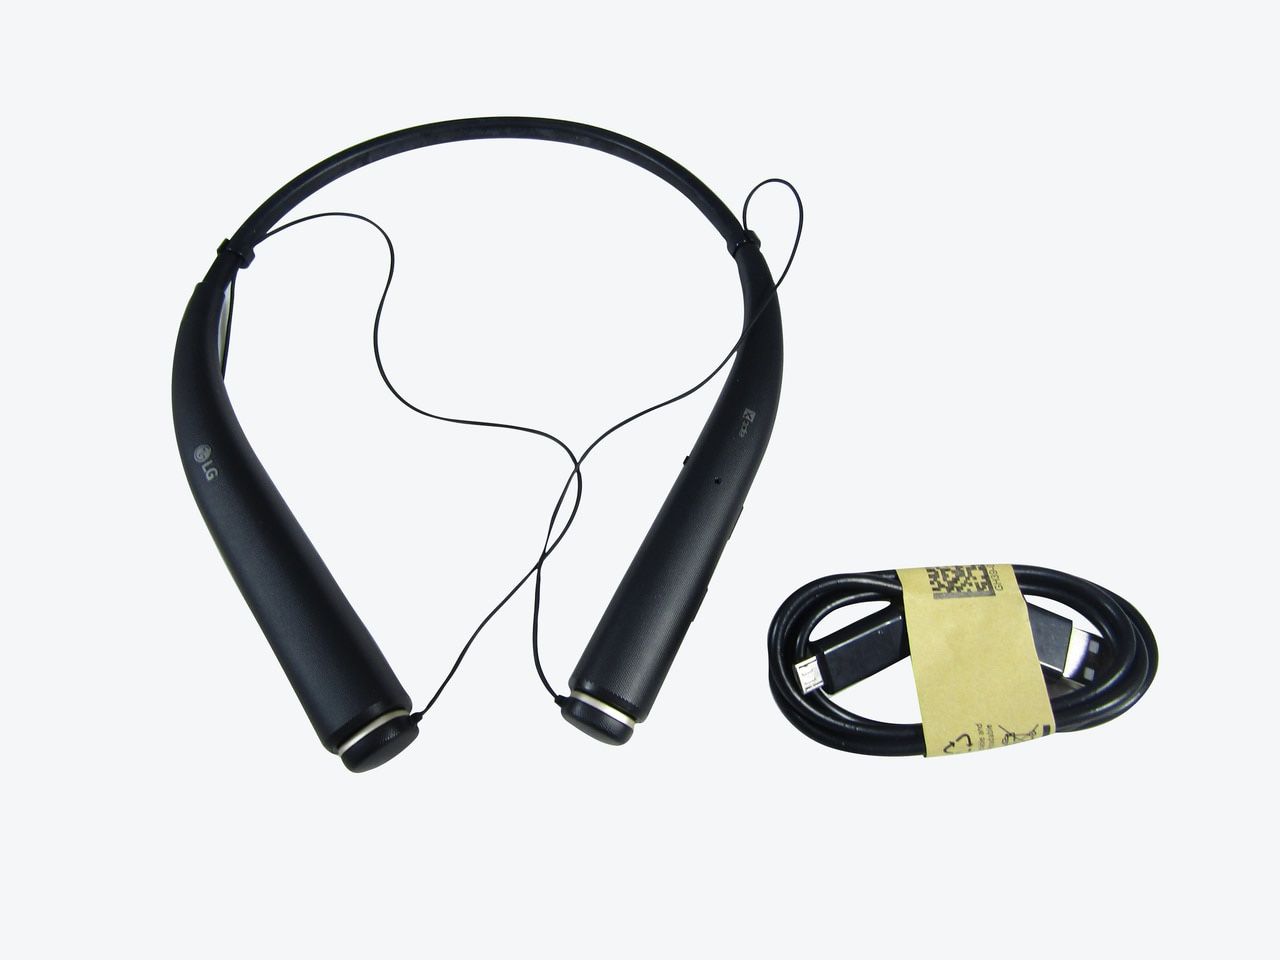 LG TONE PRO HBS-780 Wireless Stereo Headset - Black VG